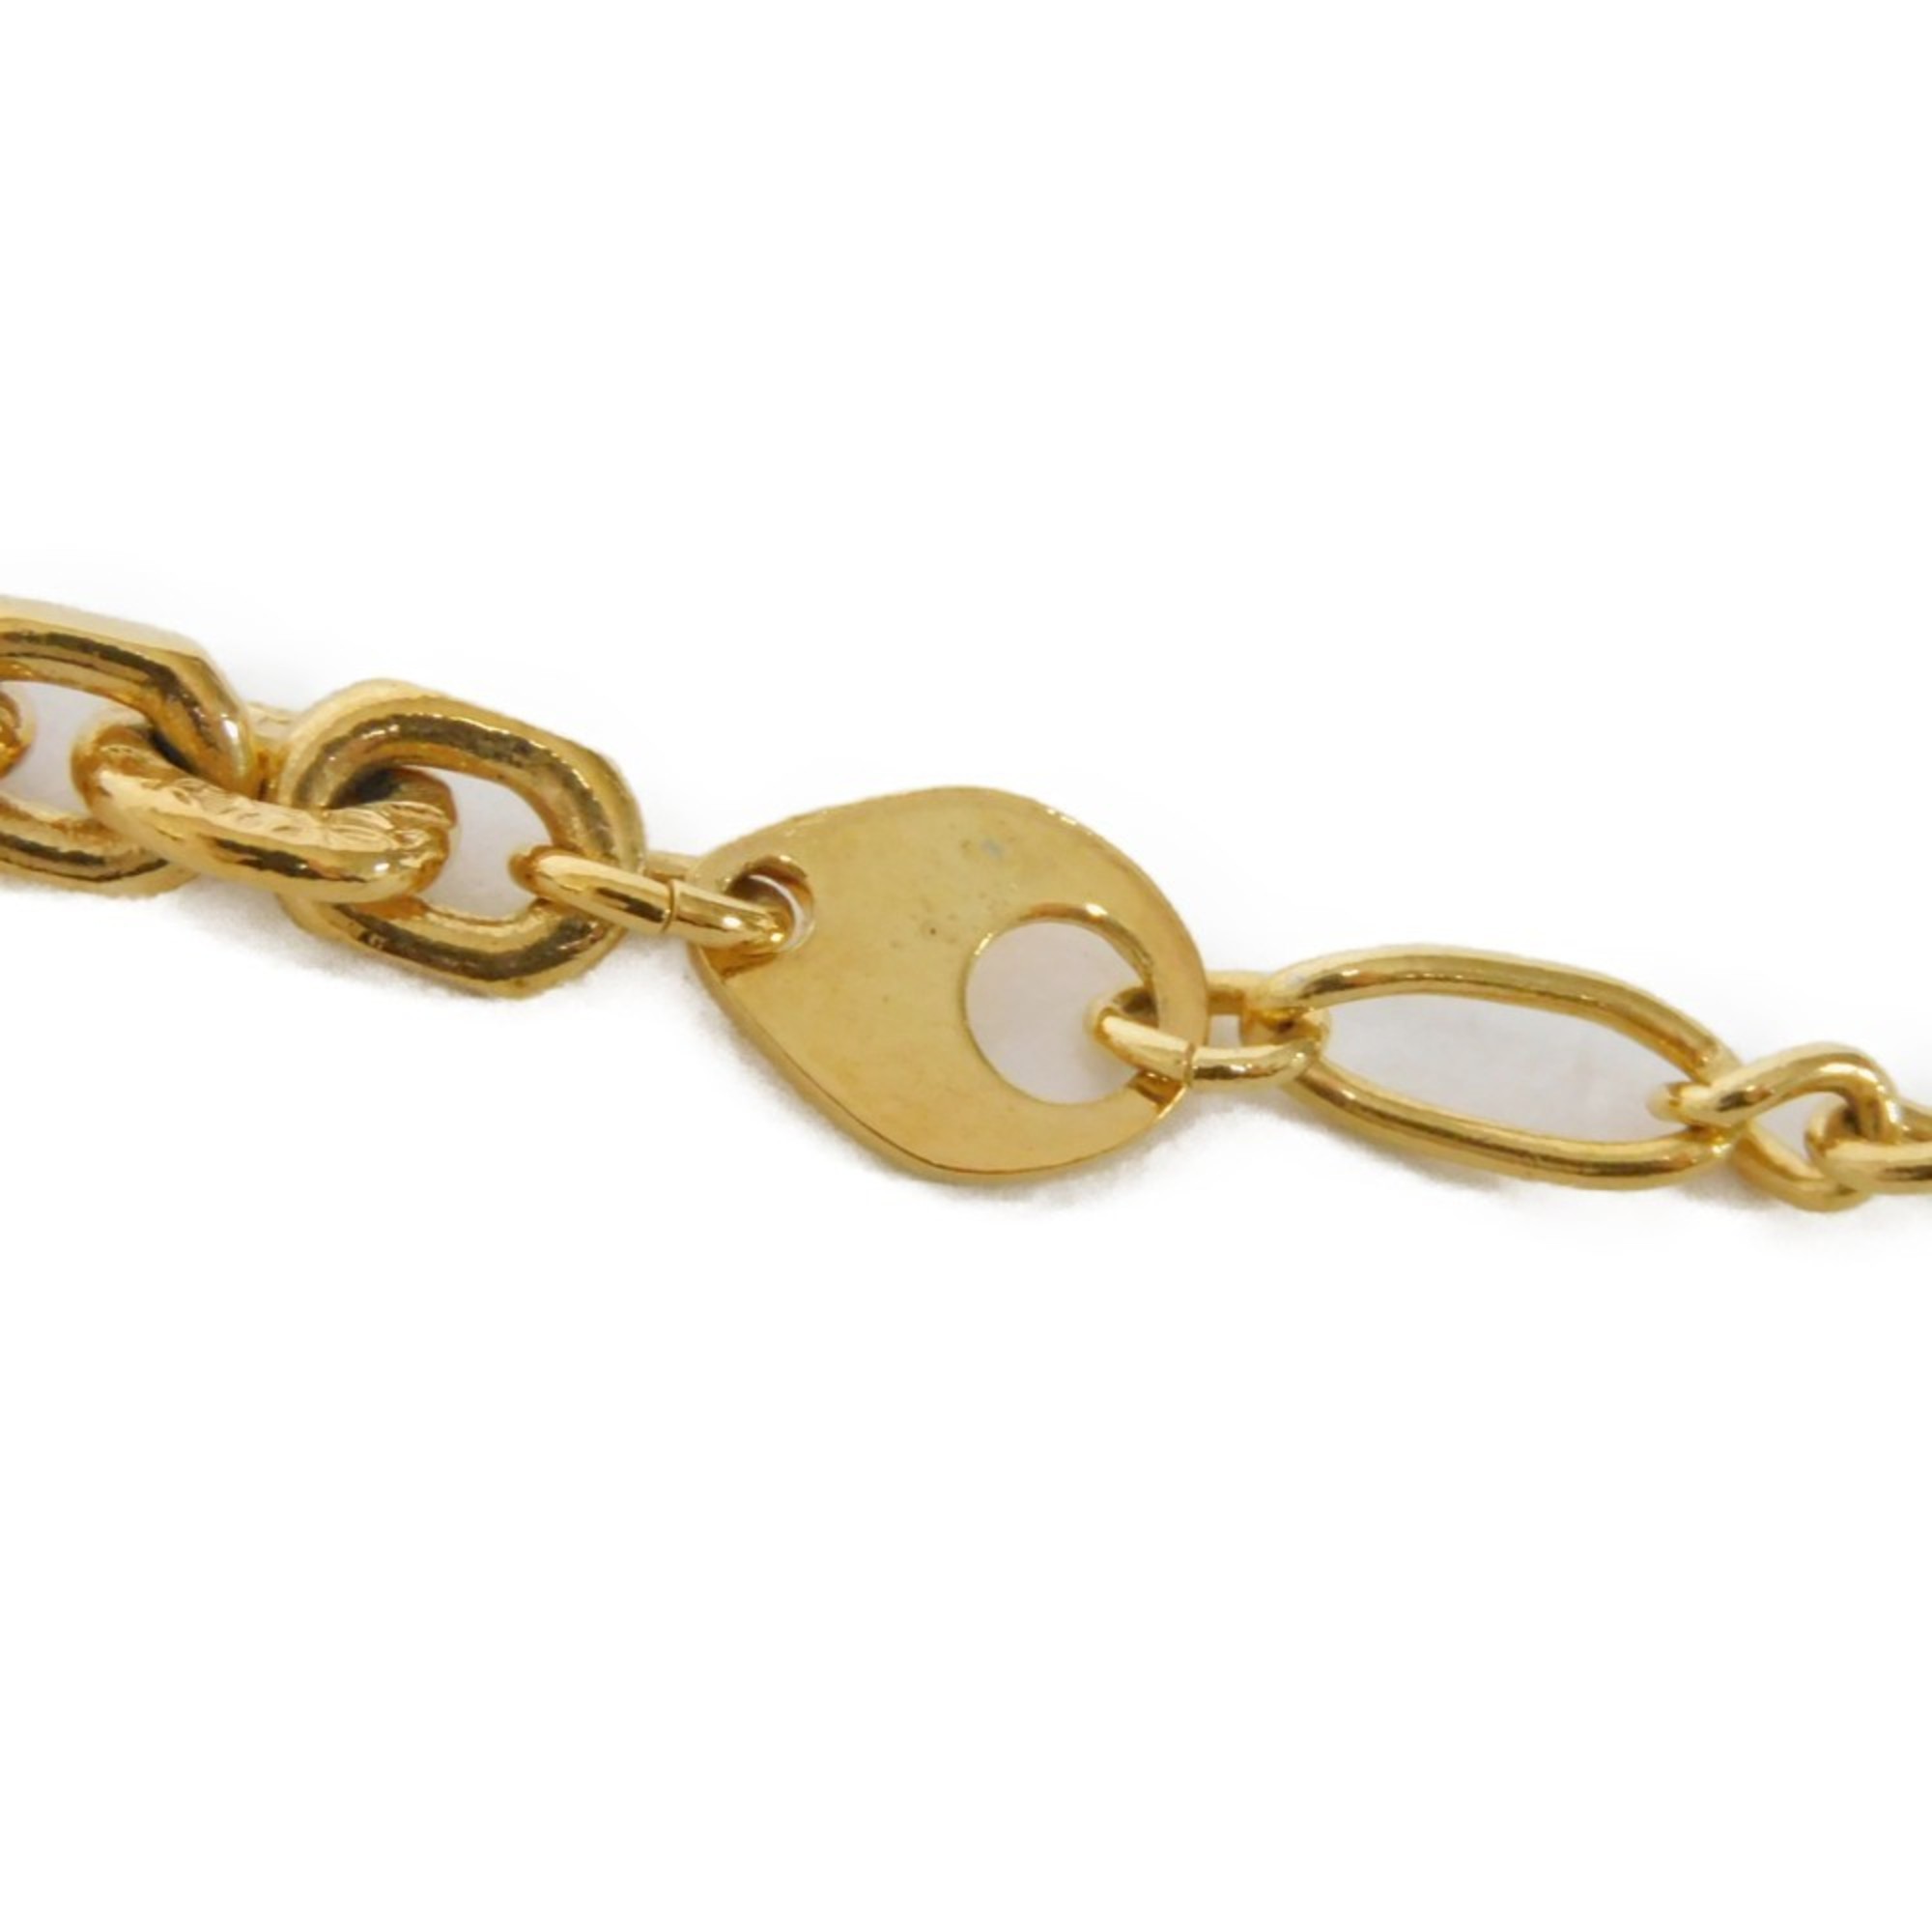 Yves Saint Laurent YVES SAINT LAURENT Necklace Round Circle Pendant Embossed Long Chain YSL Plated Gold Men Women